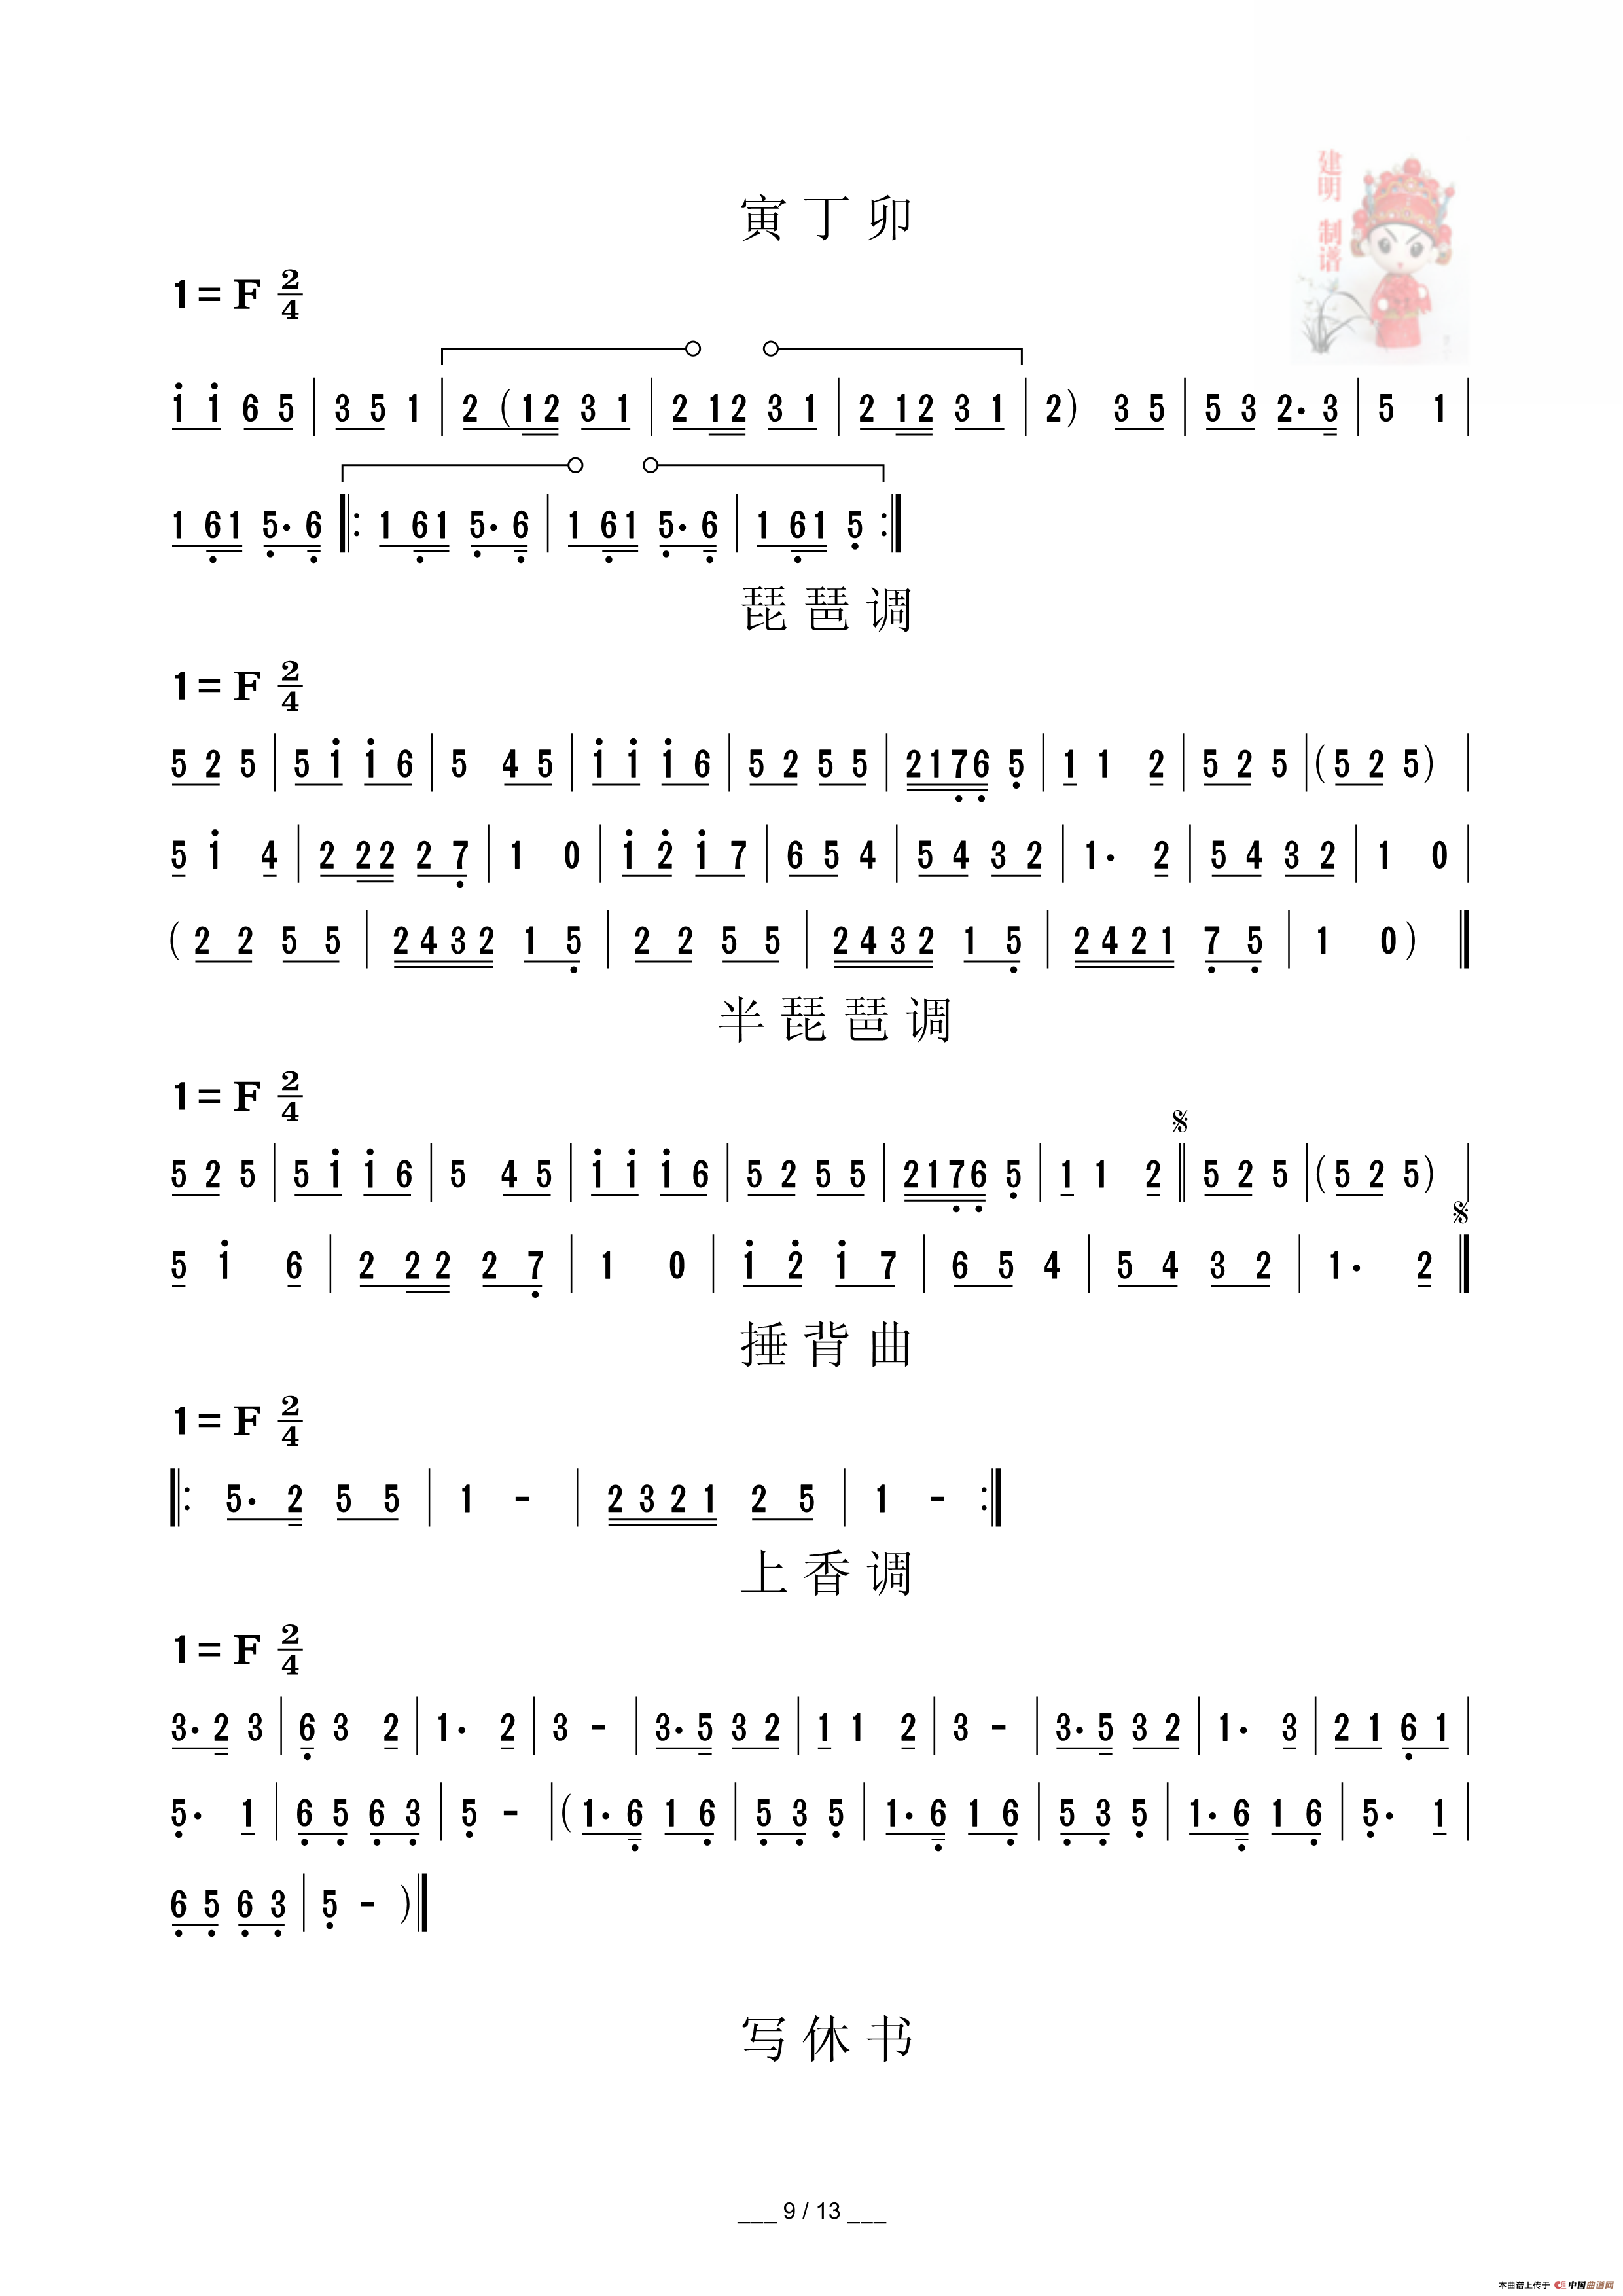 民勤小曲曲调(1)_民勤小曲曲调_Page9.png